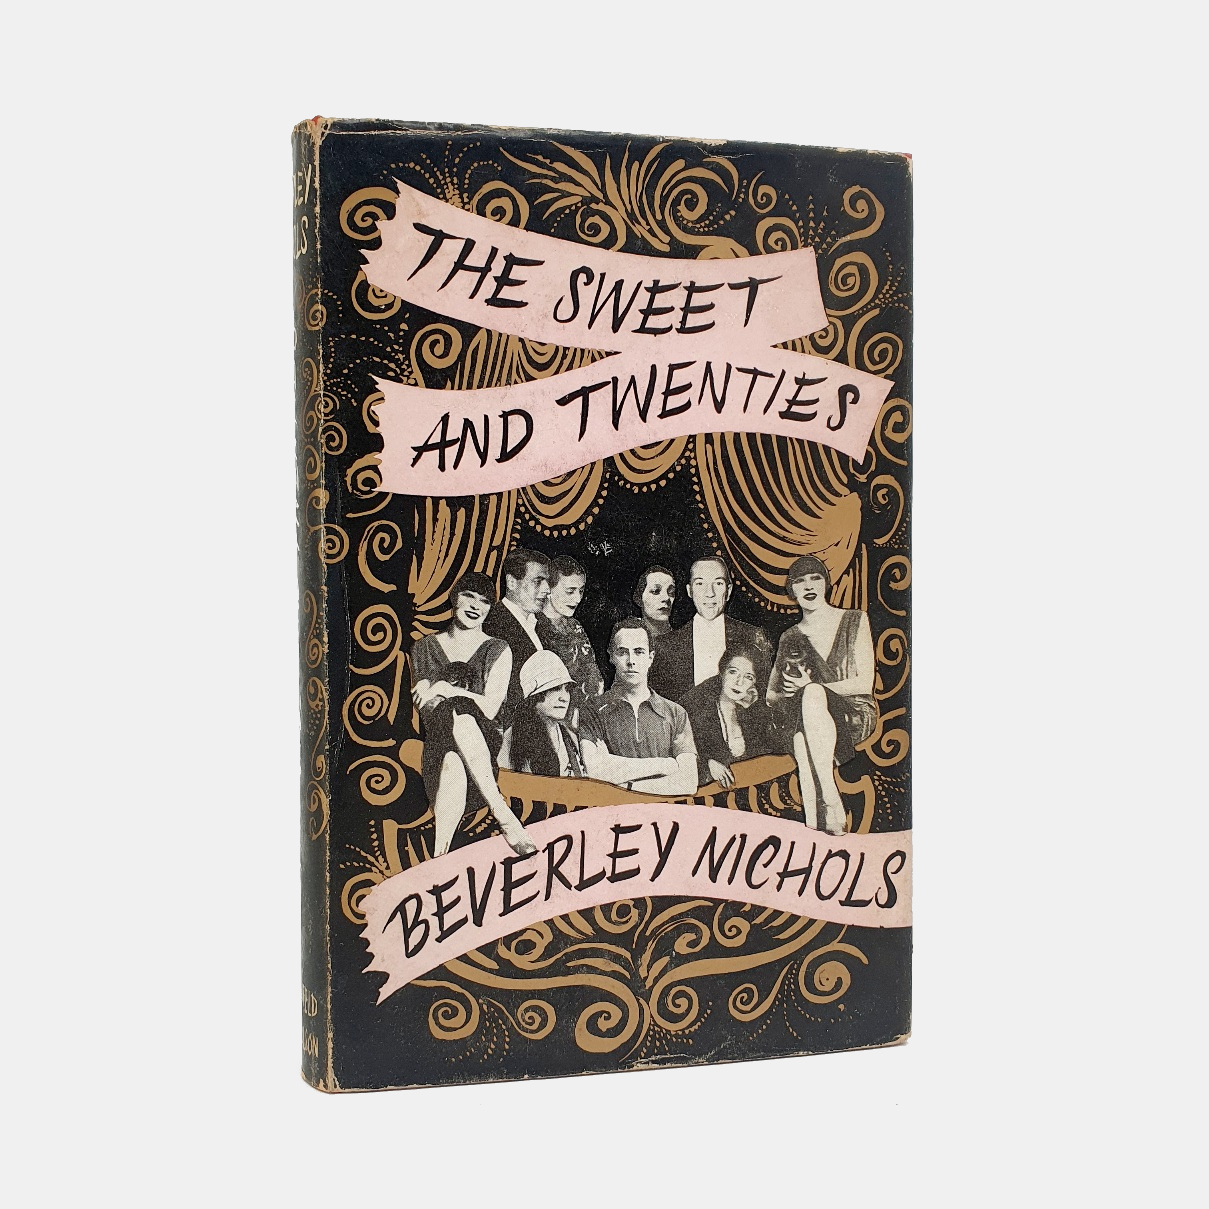 The Sweet and Twenties